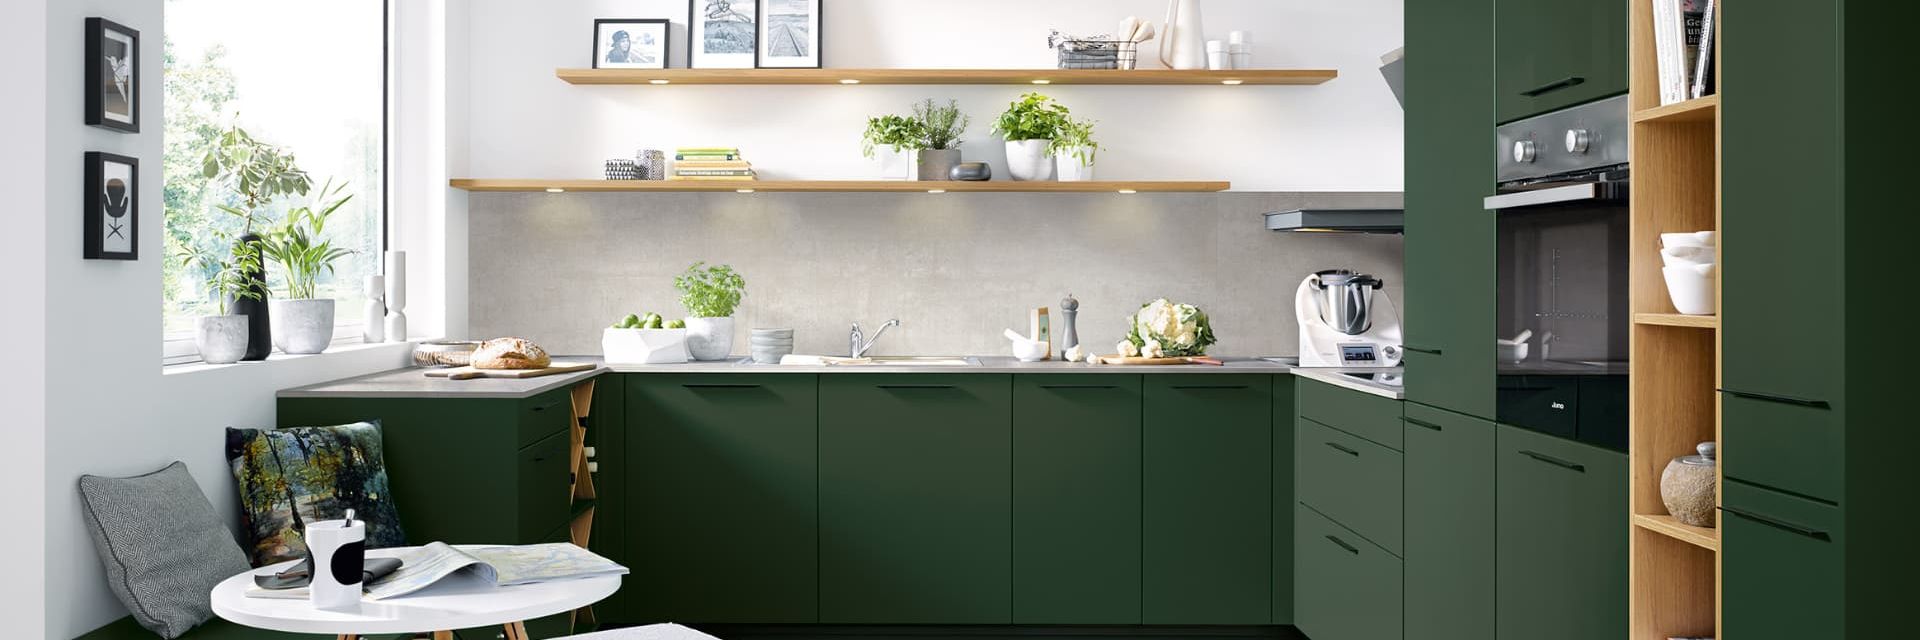 Designerküche grün